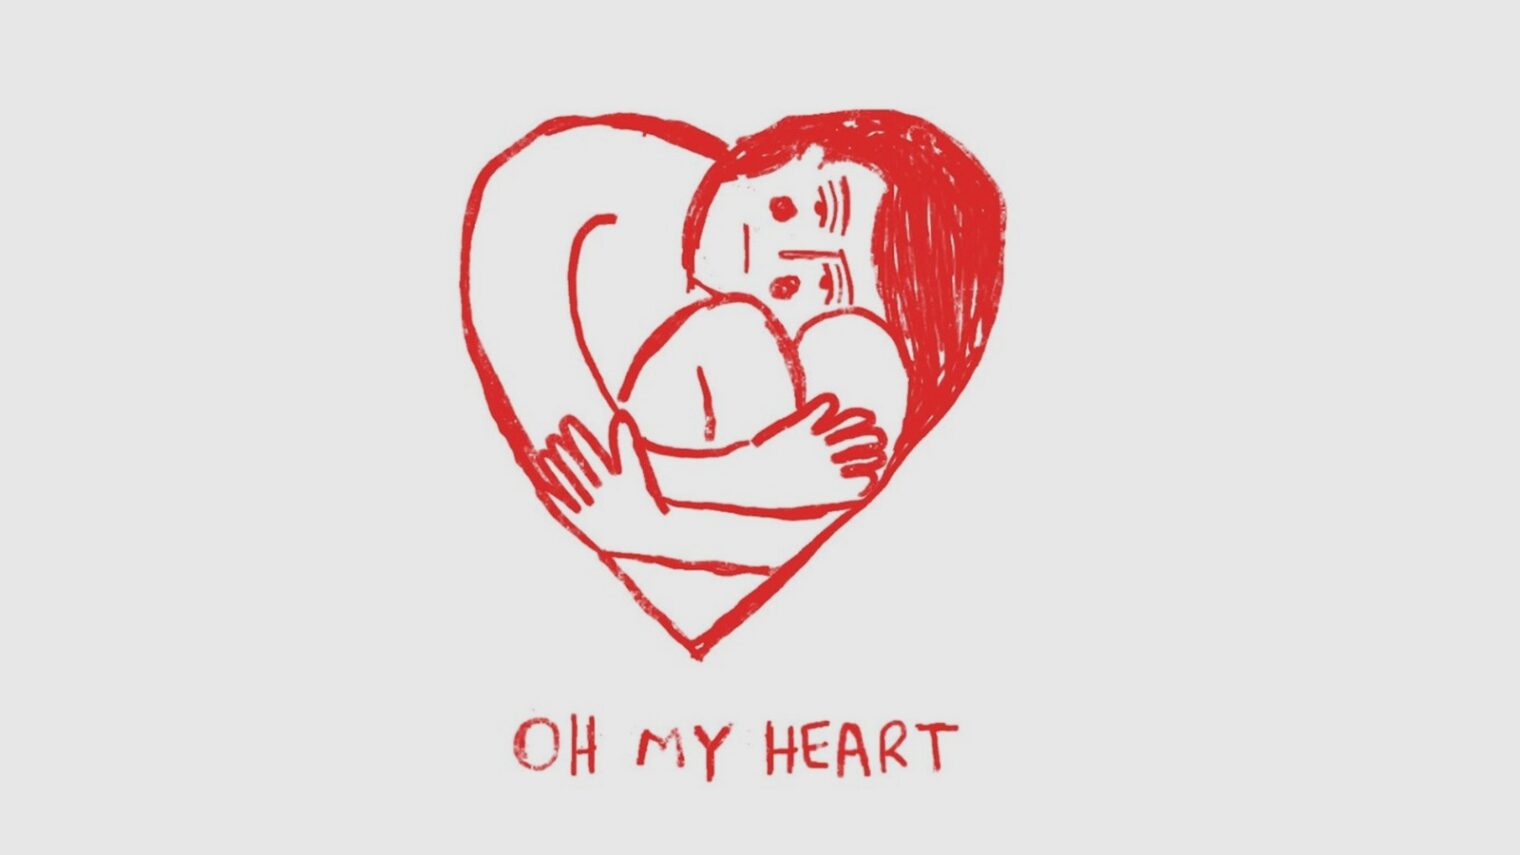 “Oh my heart” designed by Kadya. Image courtesy of Design Duty